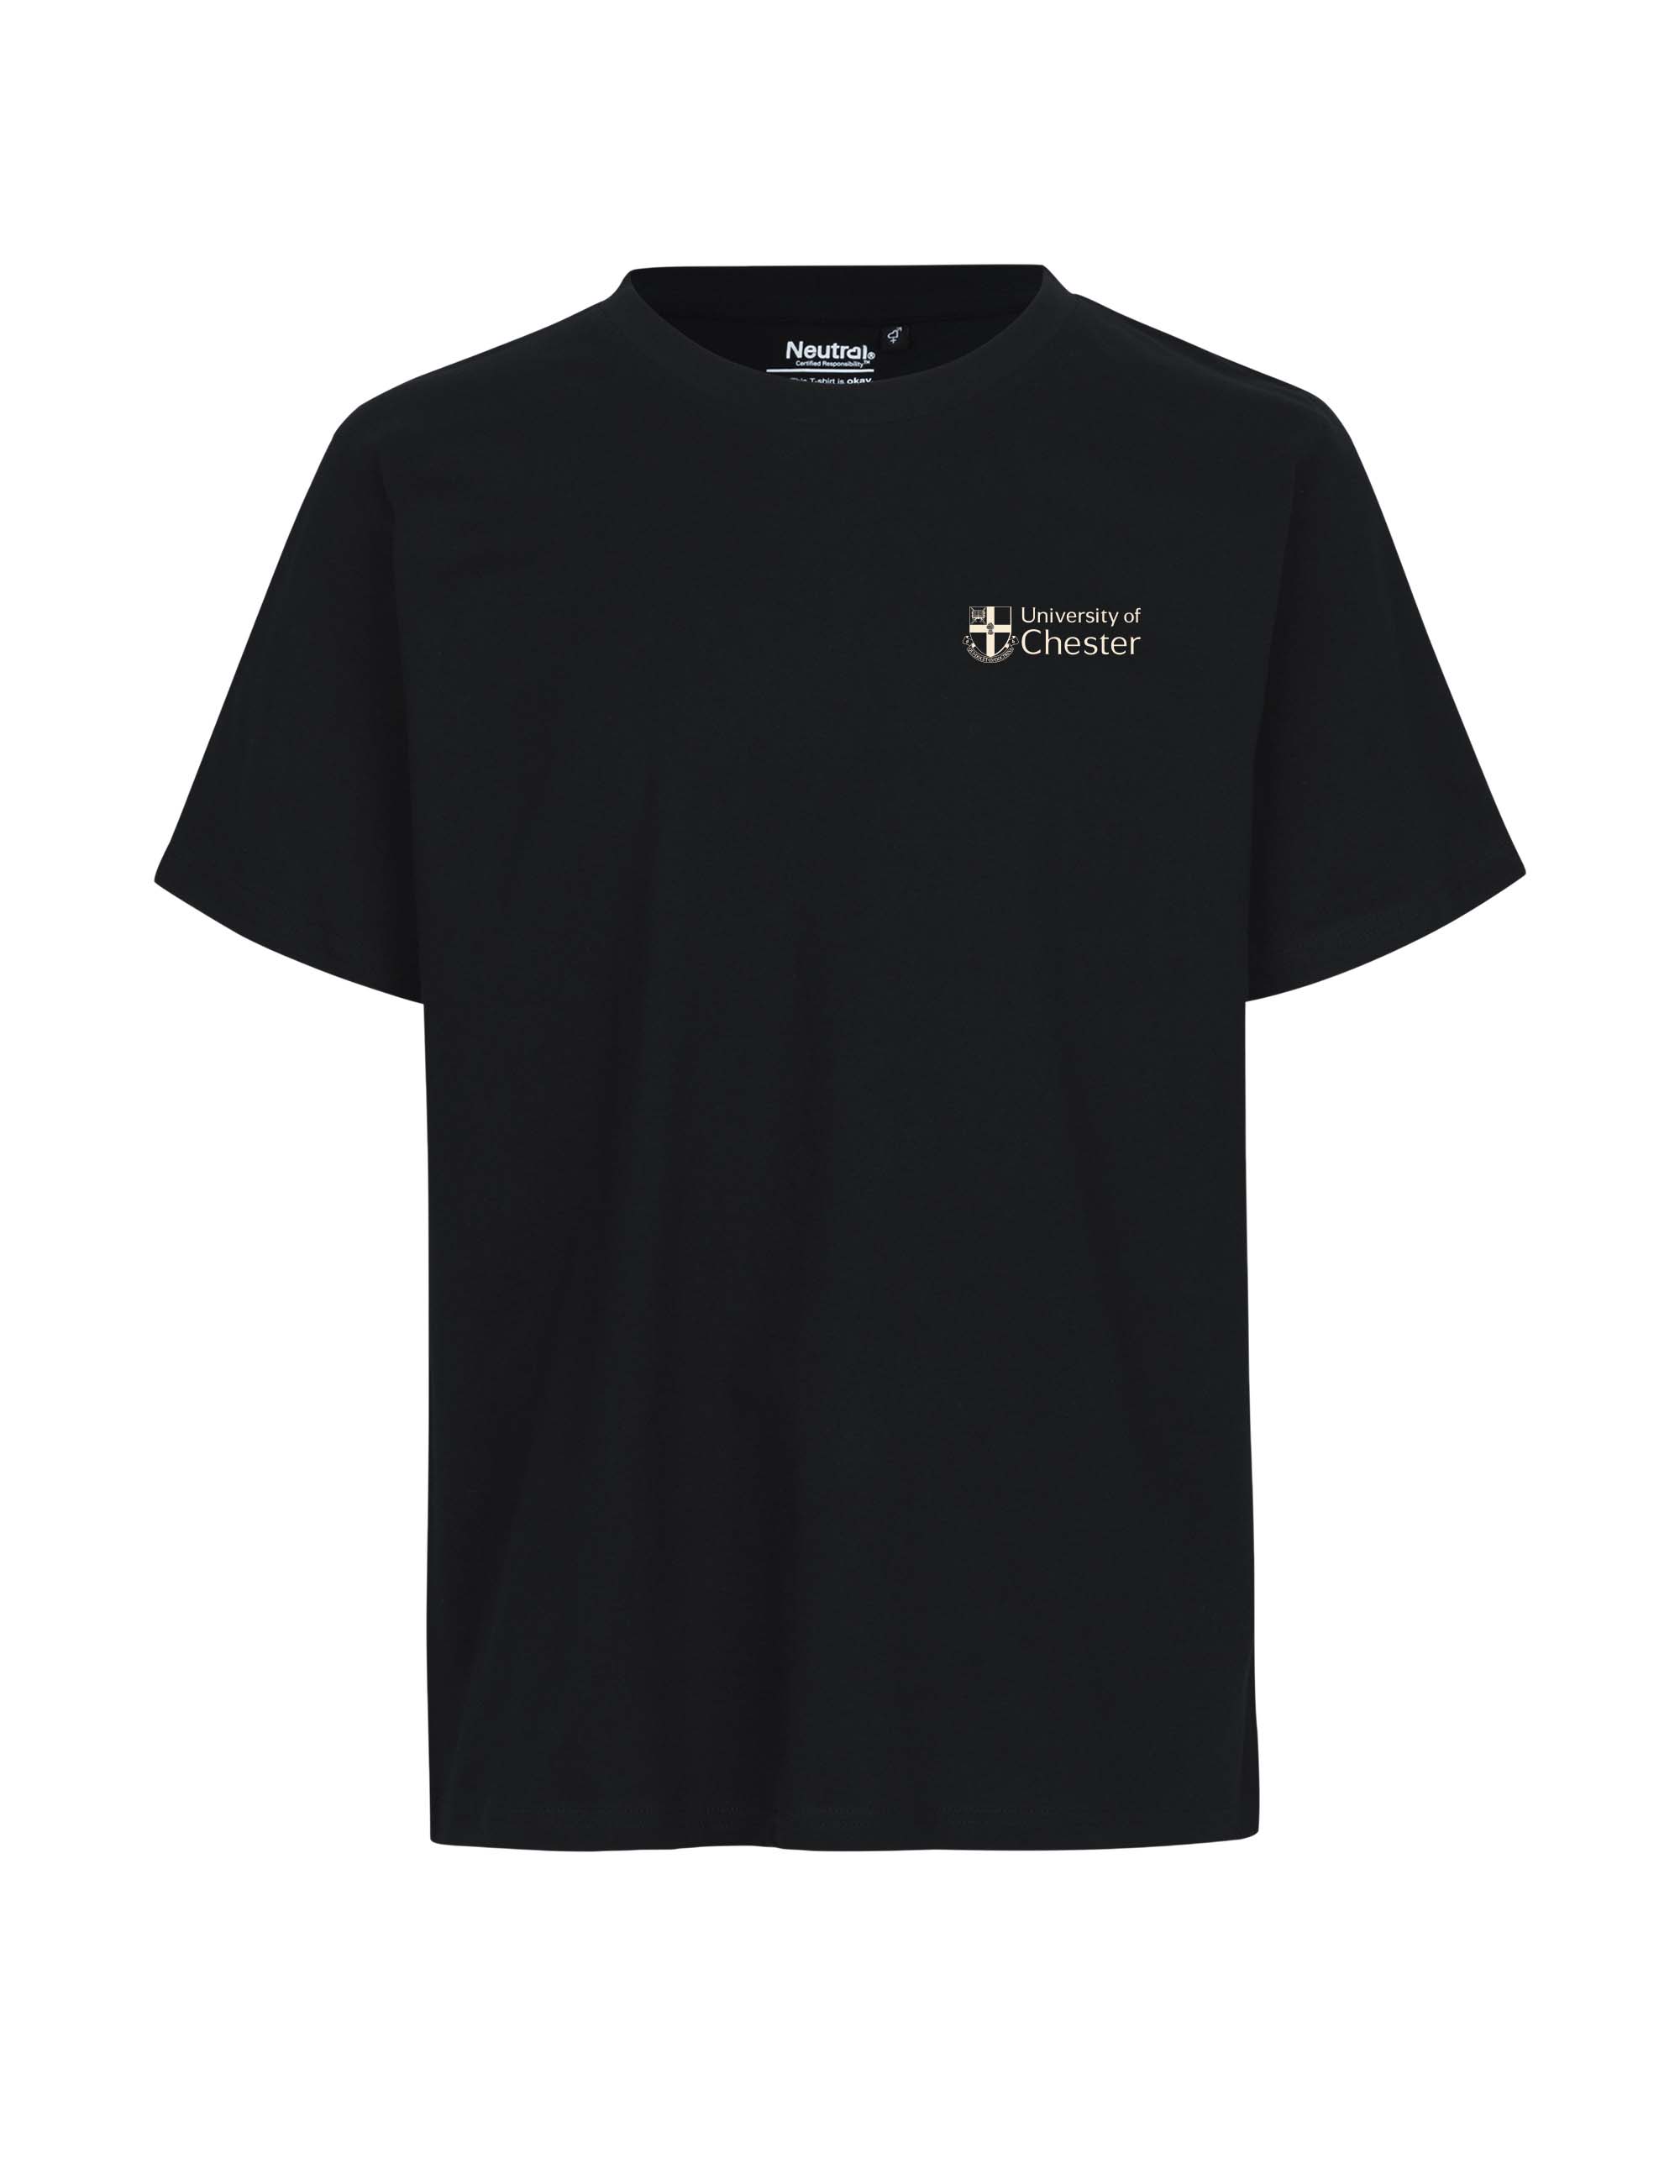 Neutral range - UoC T-Shirt - Black - XXL